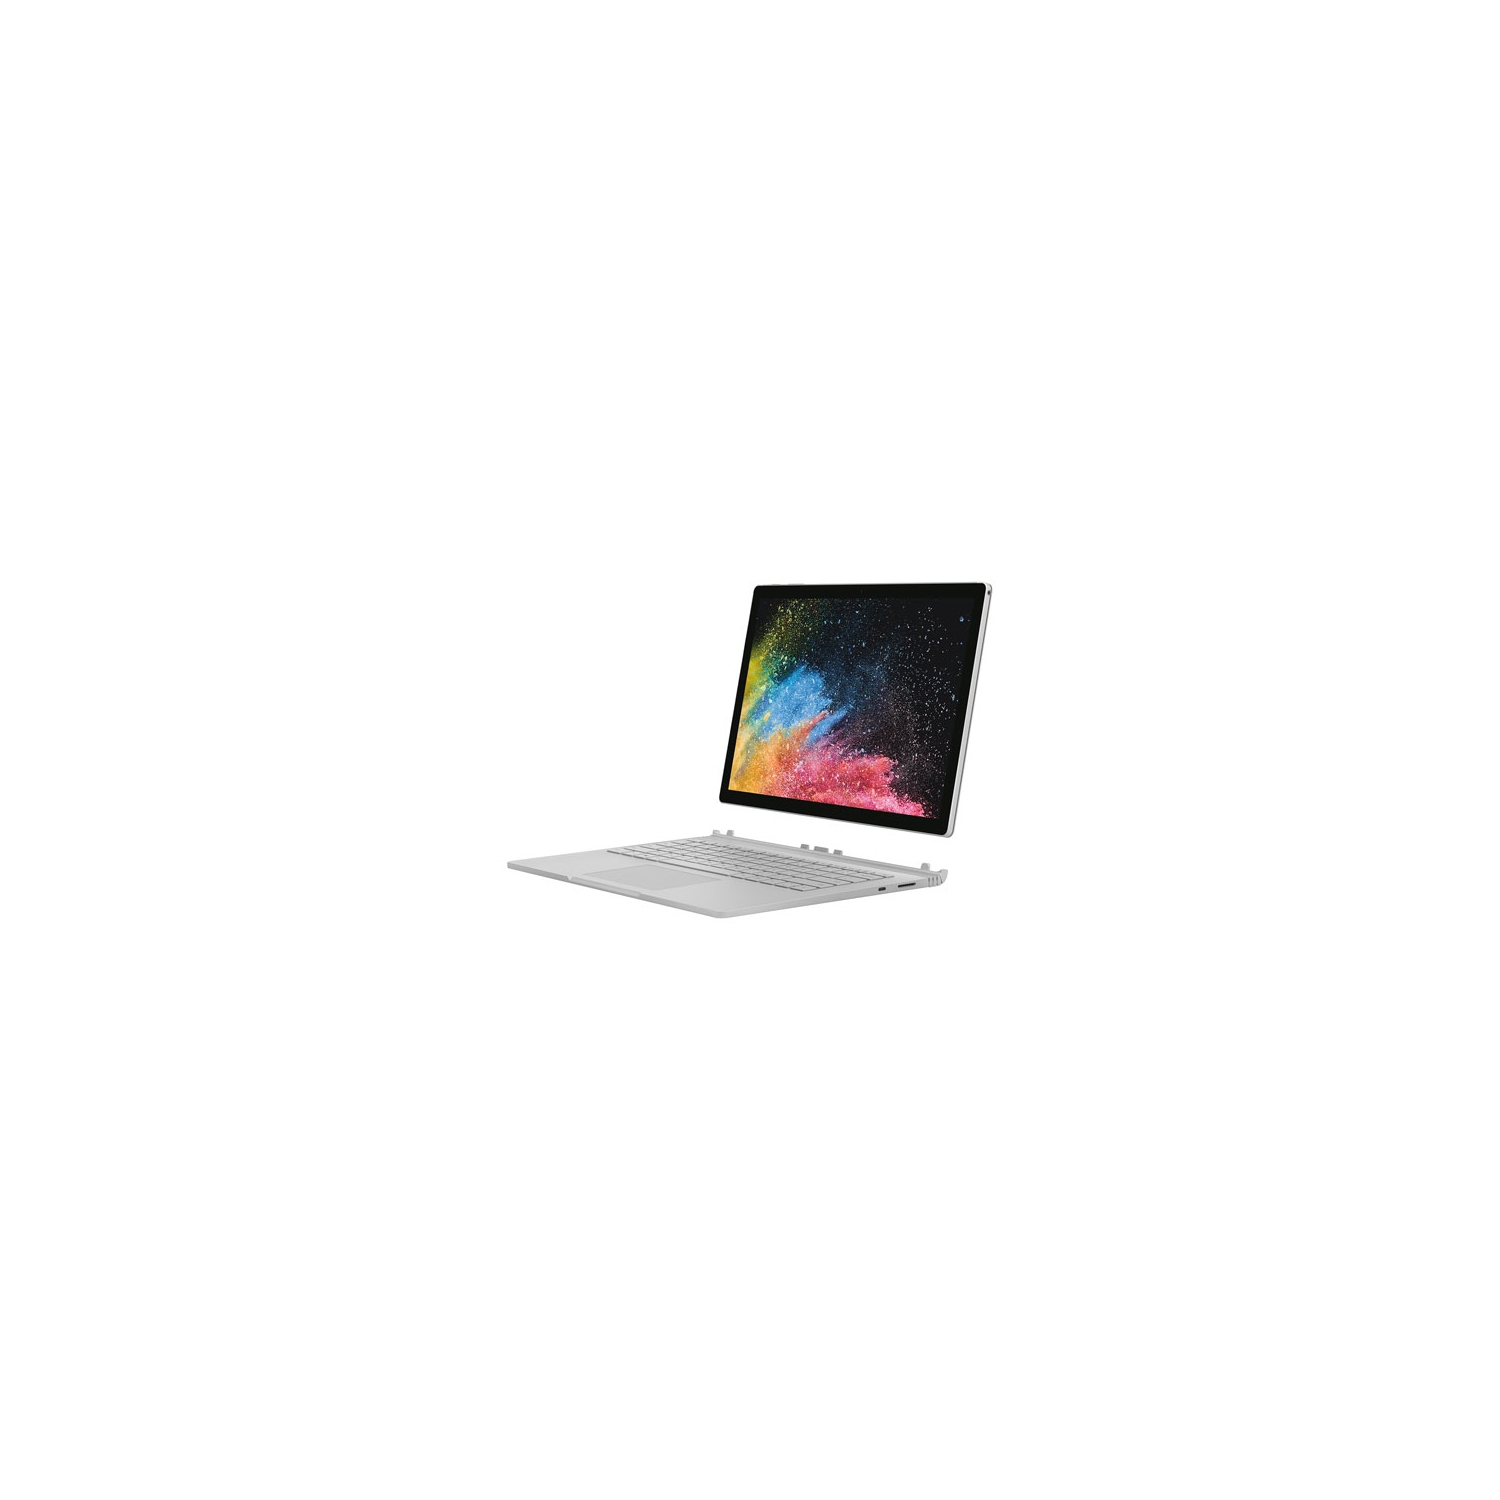 Refurbished (Good) - Microsoft Surface Book 2 13.5" 2-in-1 Laptop (Intel Core i5-7300U/256GB SSD/8GB RAM) - Eng